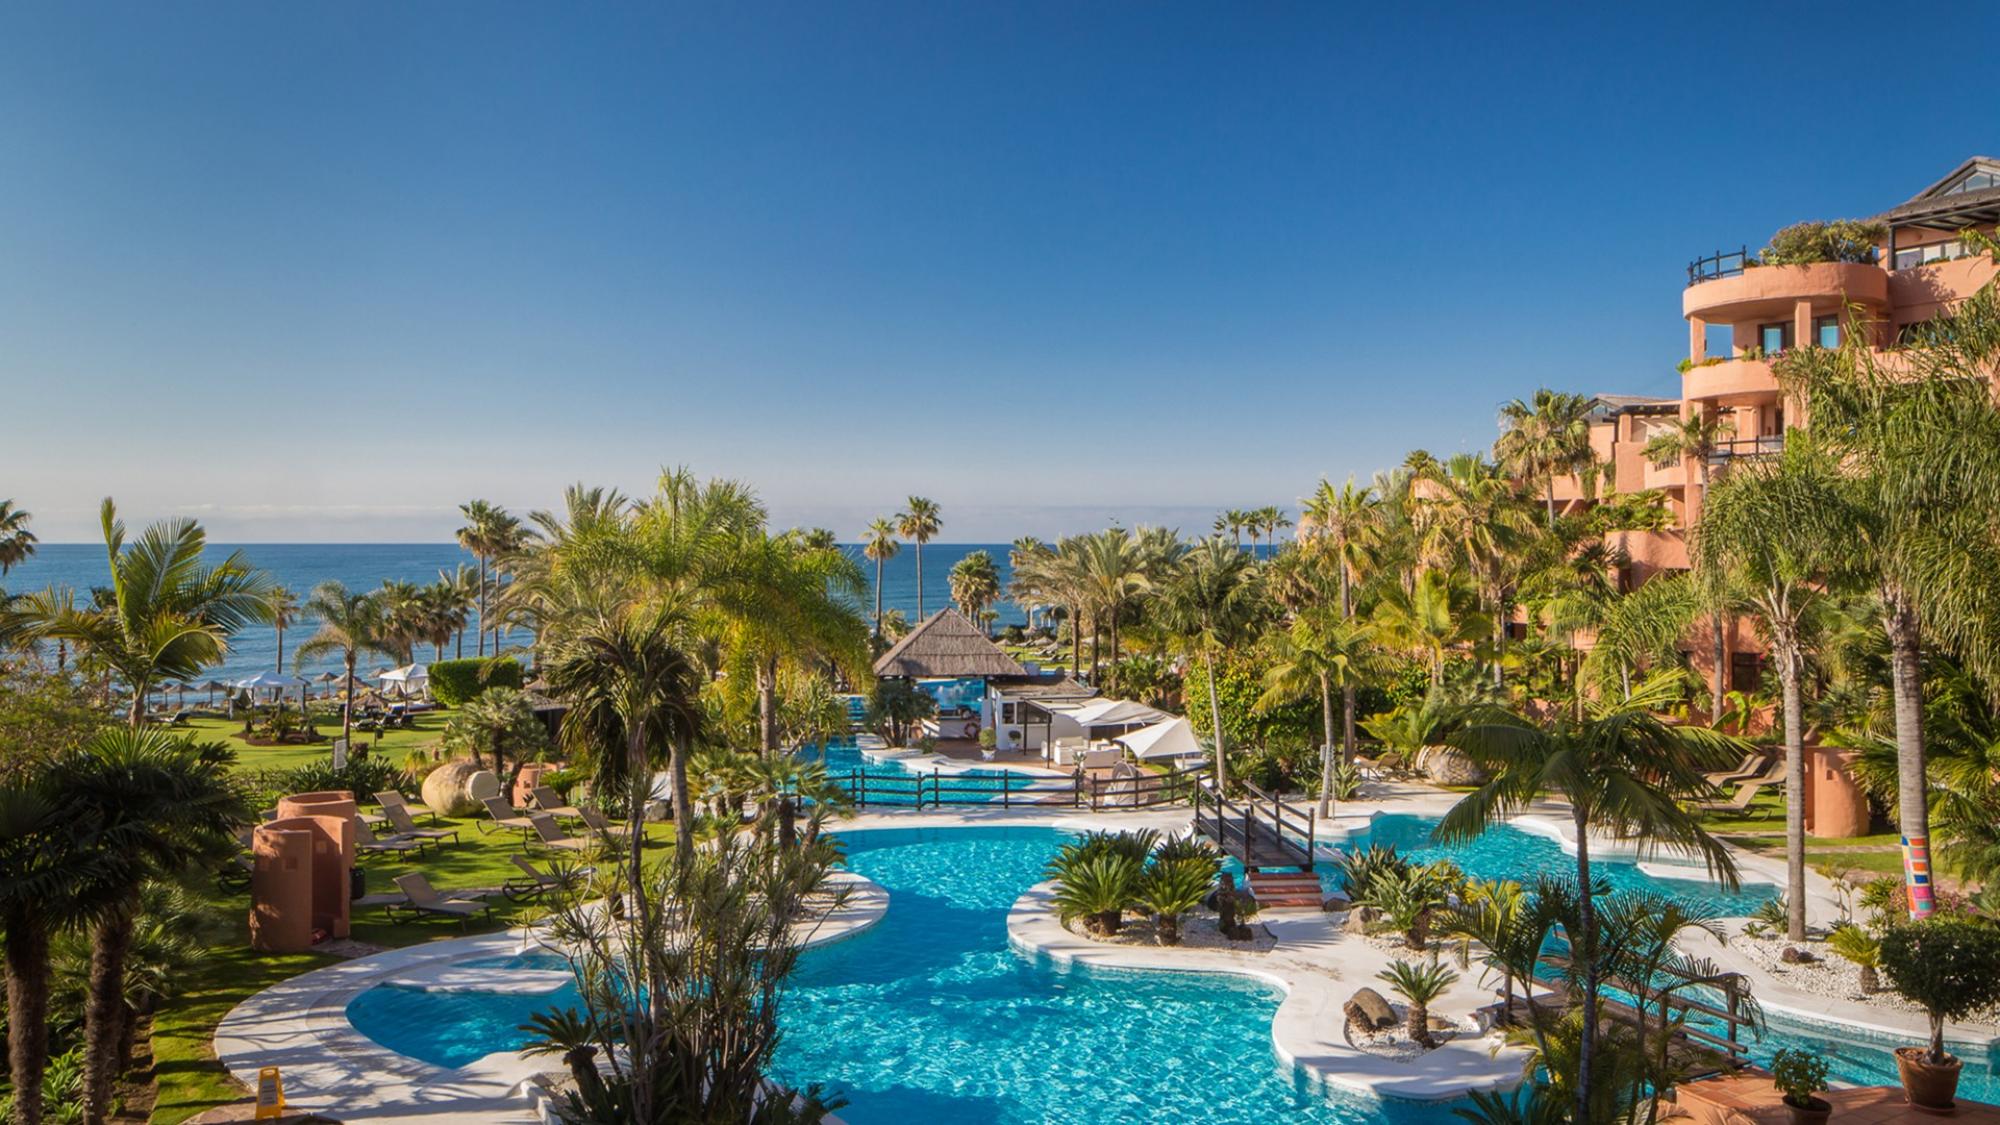 The Kempinski Hotel Bahia's impressive main pool within brilliant Costa Del Sol.